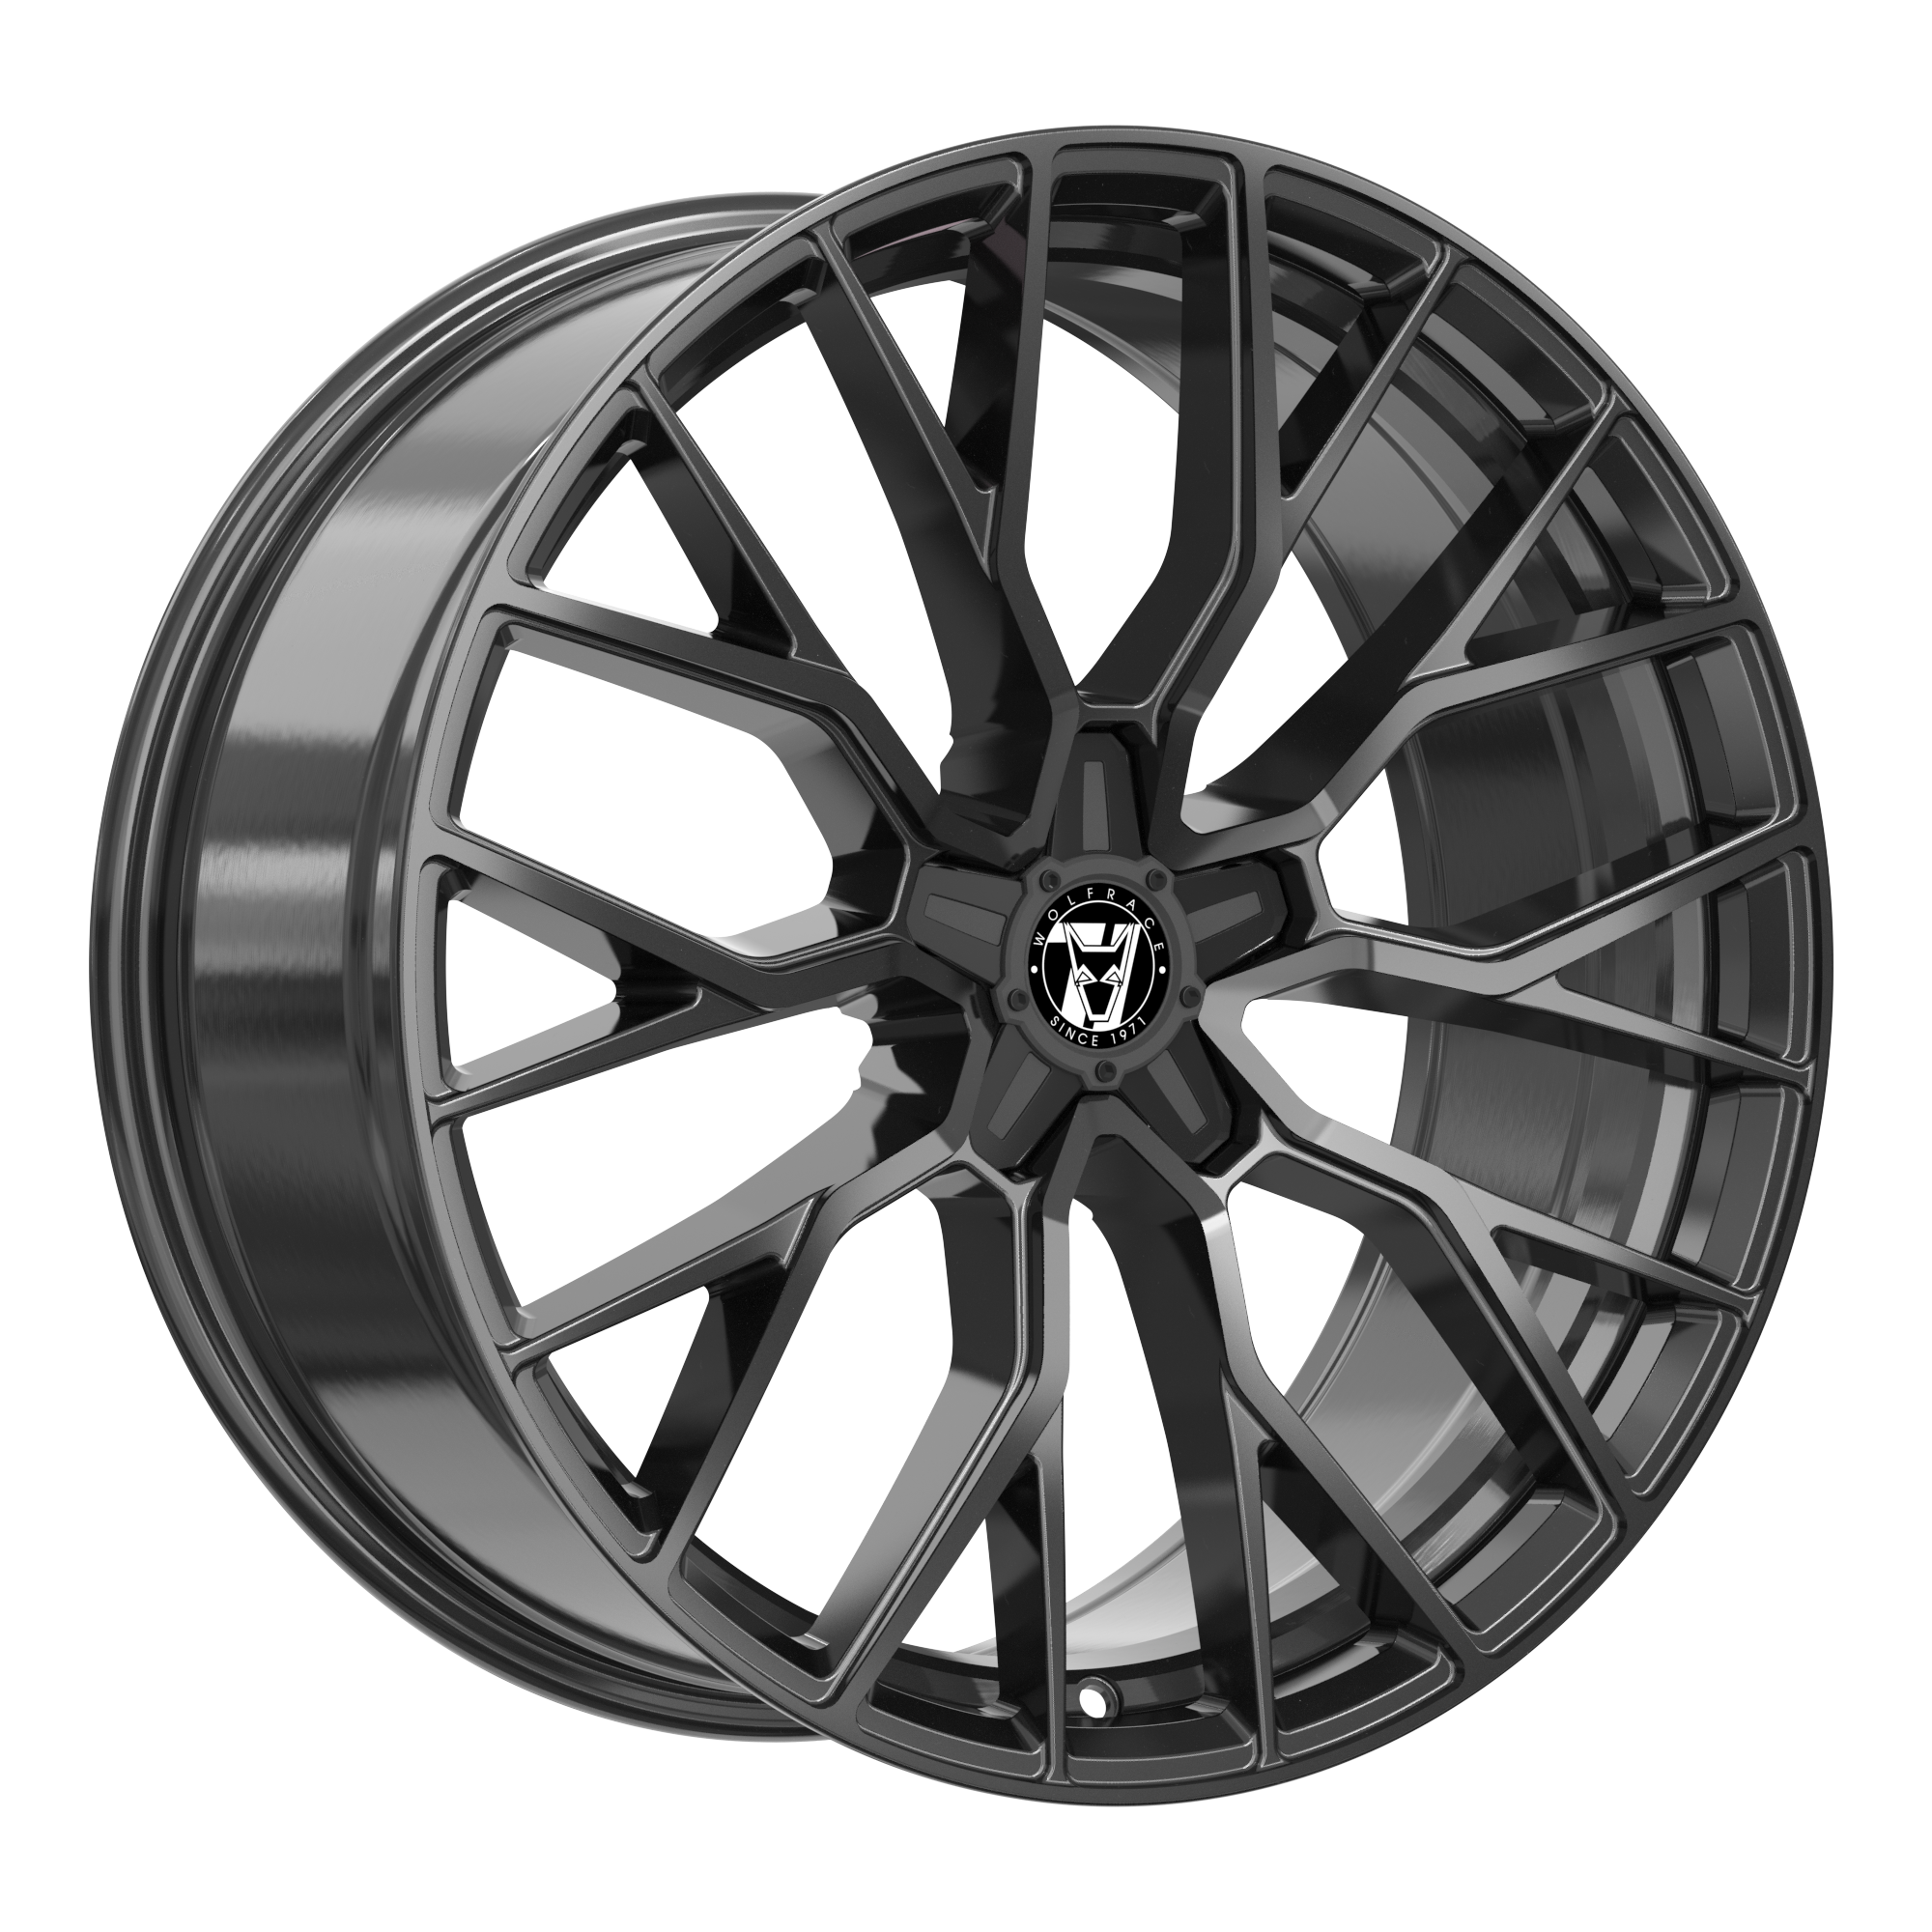 Demon Wheels 71 Munich GTR Black Edition [10.5x22] -5x130- ET 40